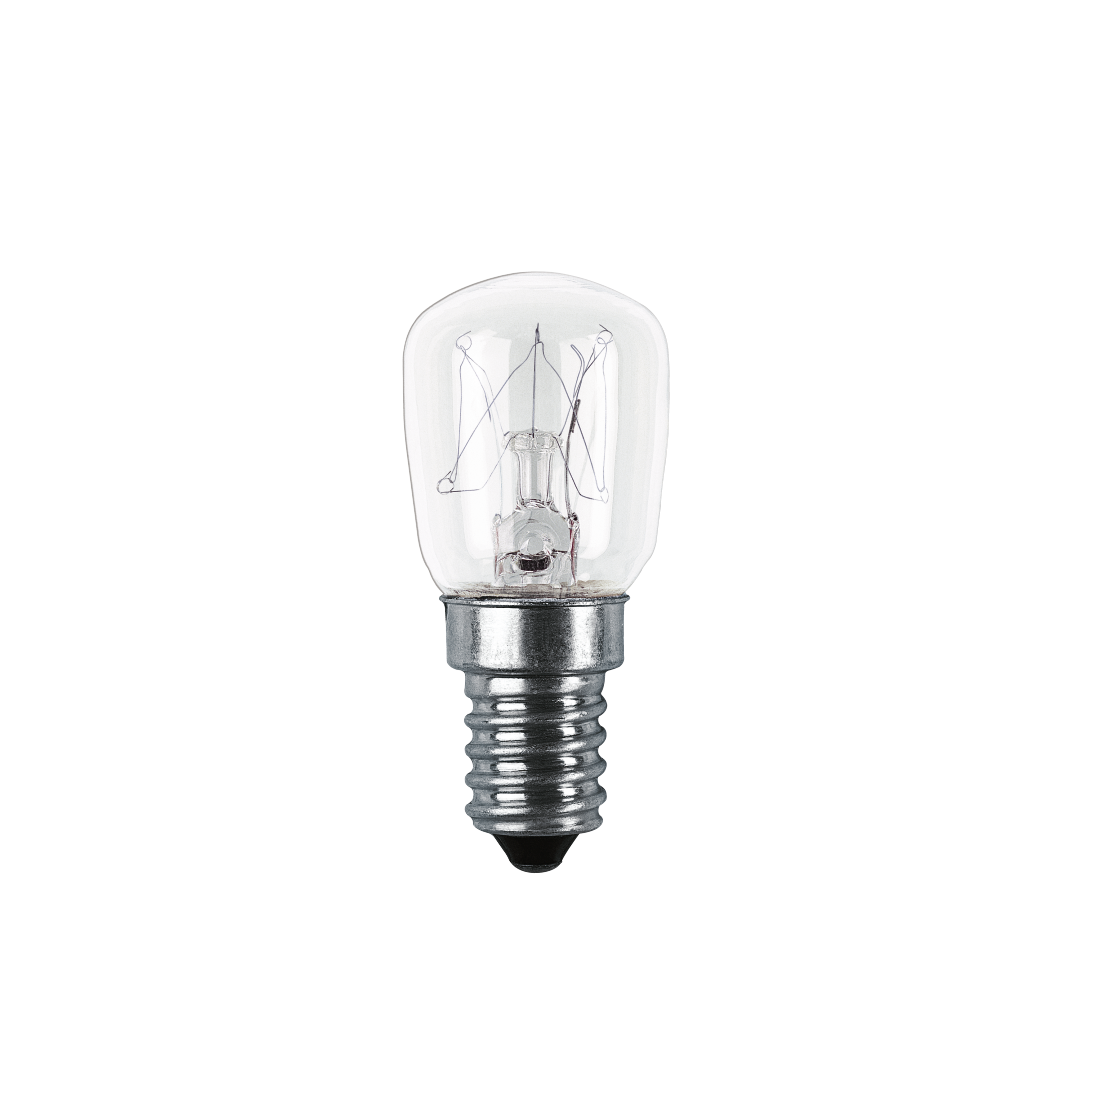 abx Druckfähige Abbildung - Xavax, Kühlgerätelampe, 15W, E14, Birnchenform, klar